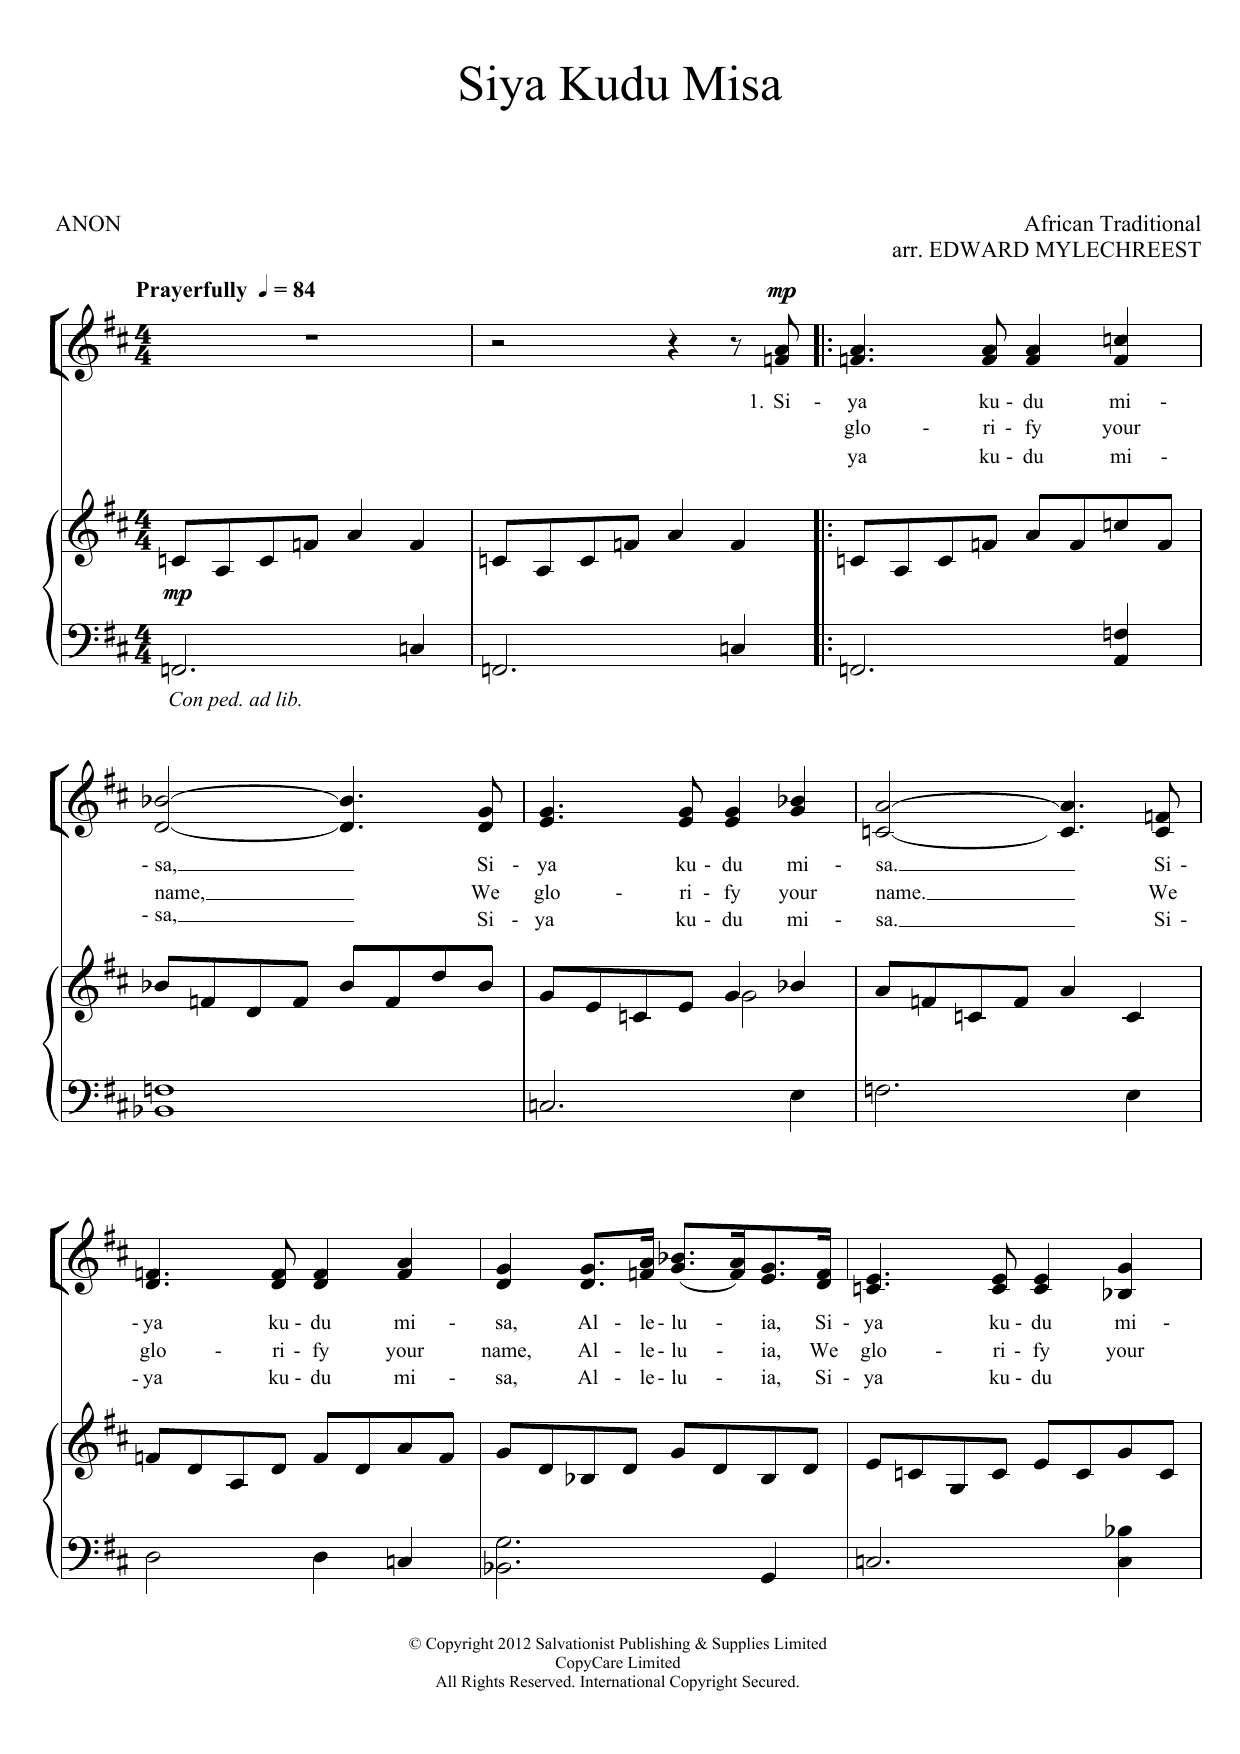 The Salvation Army Siya Kuda Misa sheet music notes and chords arranged for Piano, Vocal & Guitar Chords